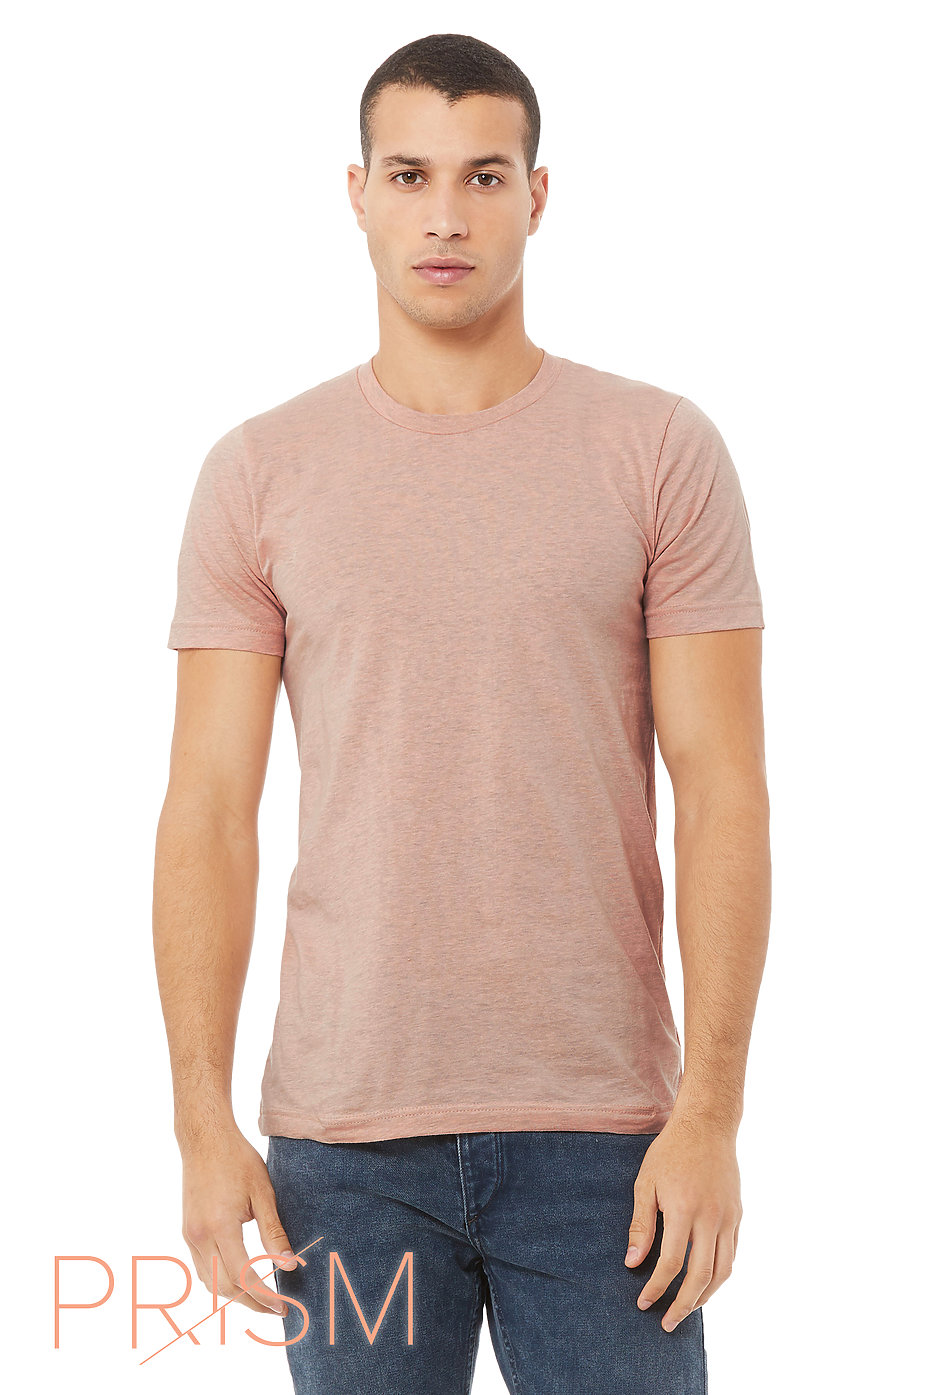 Download Heathered Shirt Mens Wholesale Clothing Heather T Shirts Blank T Shirts Bella Canvas